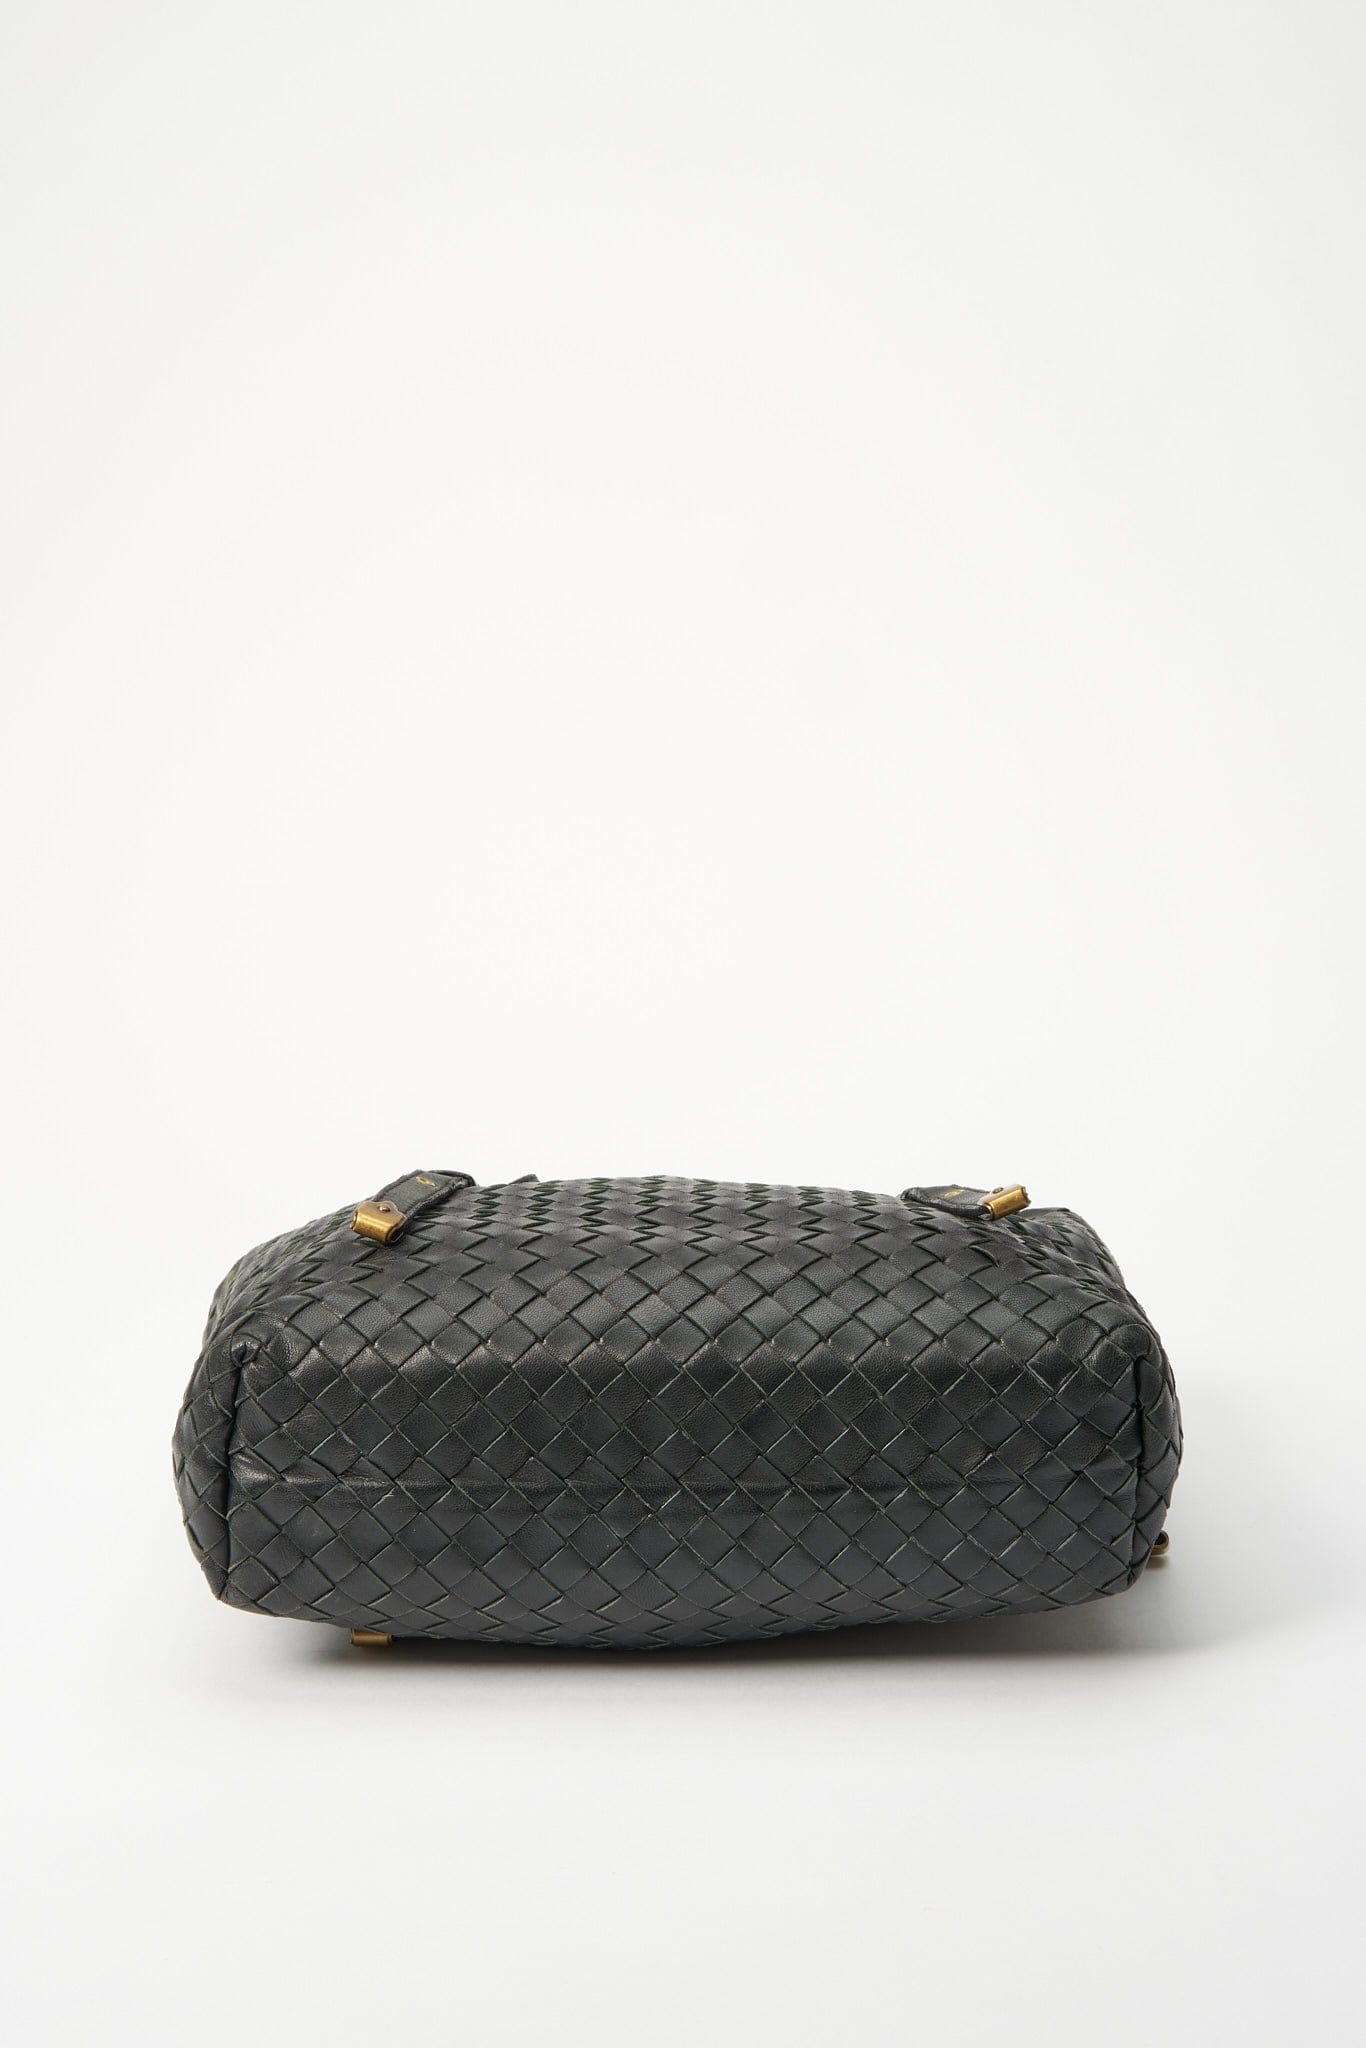 Bottega Veneta Intrecciato Leather Shoulder Bag on SALE